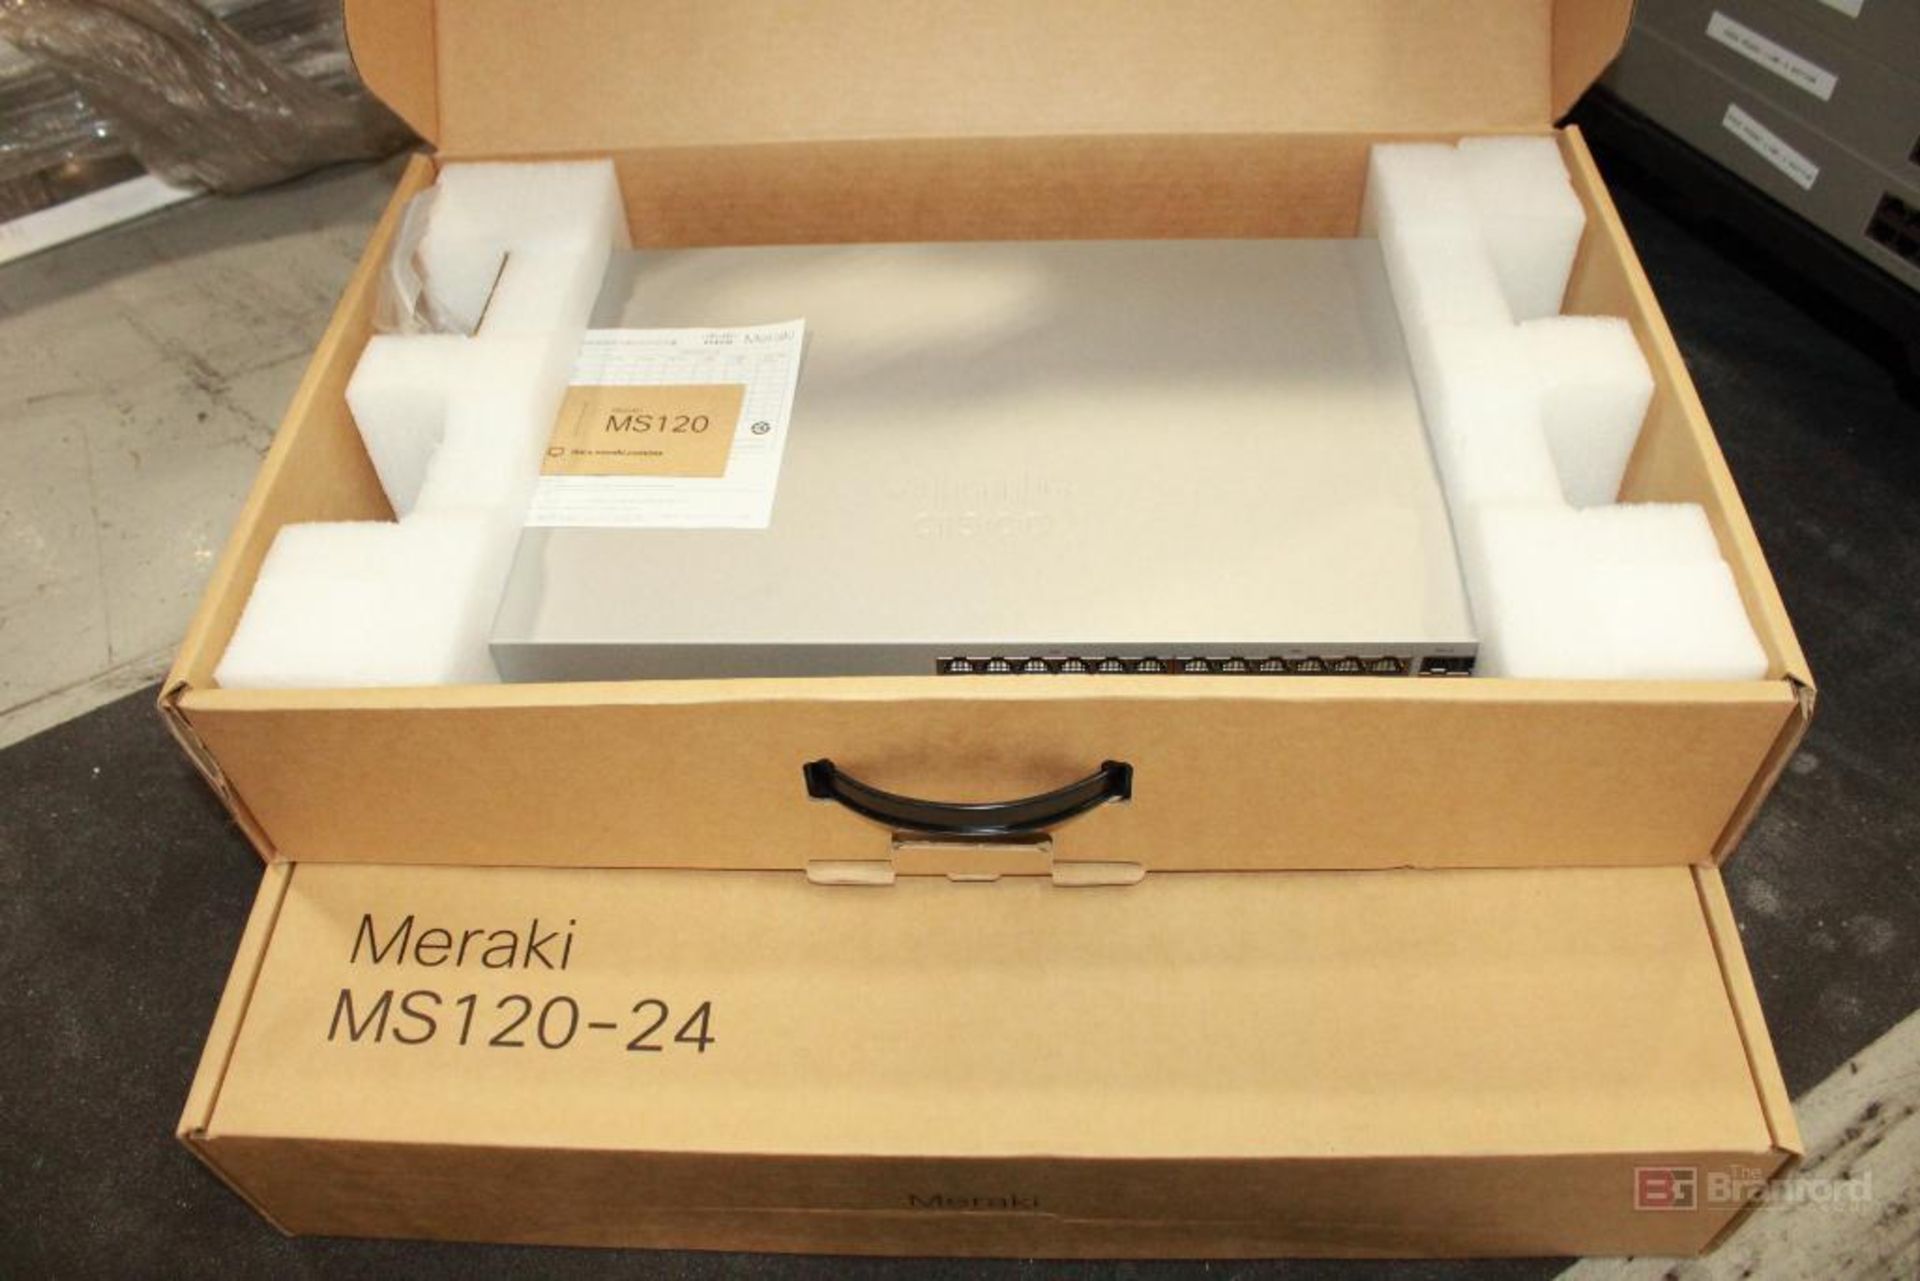 (2) Cisco Meraki MS120-24, Gigabit Ethernet Switch